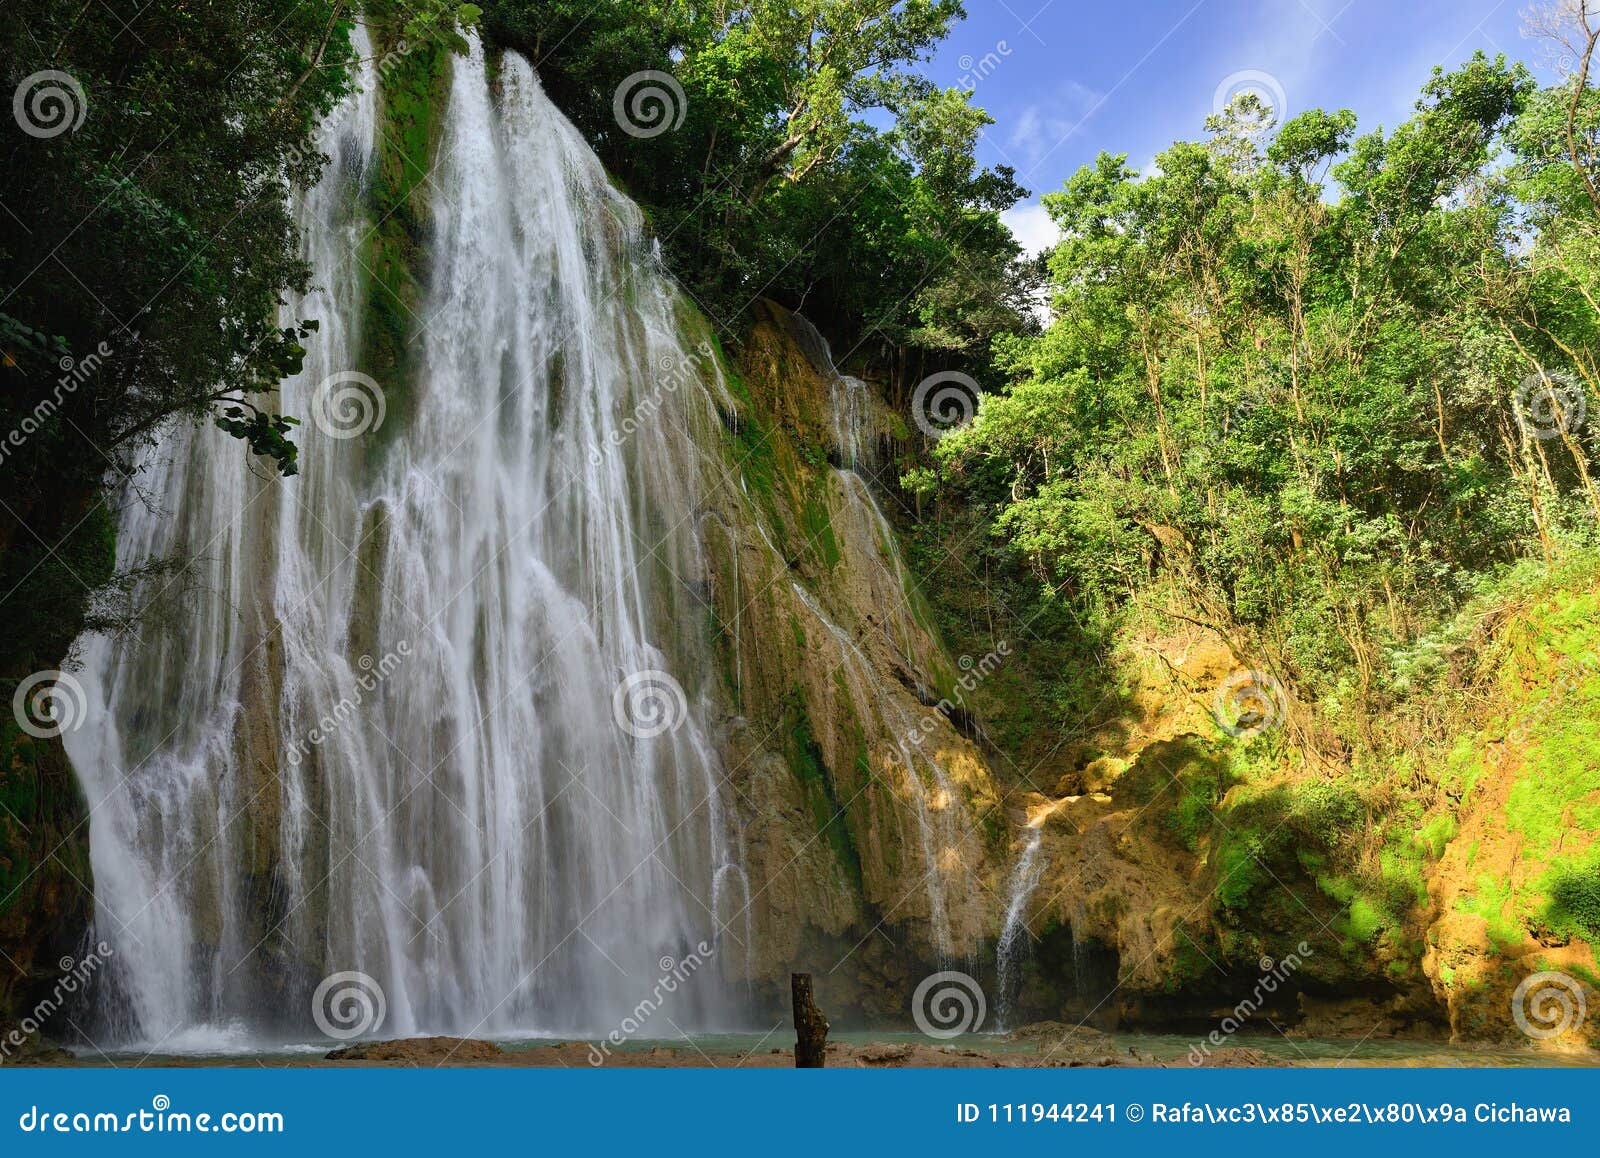 el limon waterfall on dominican republic